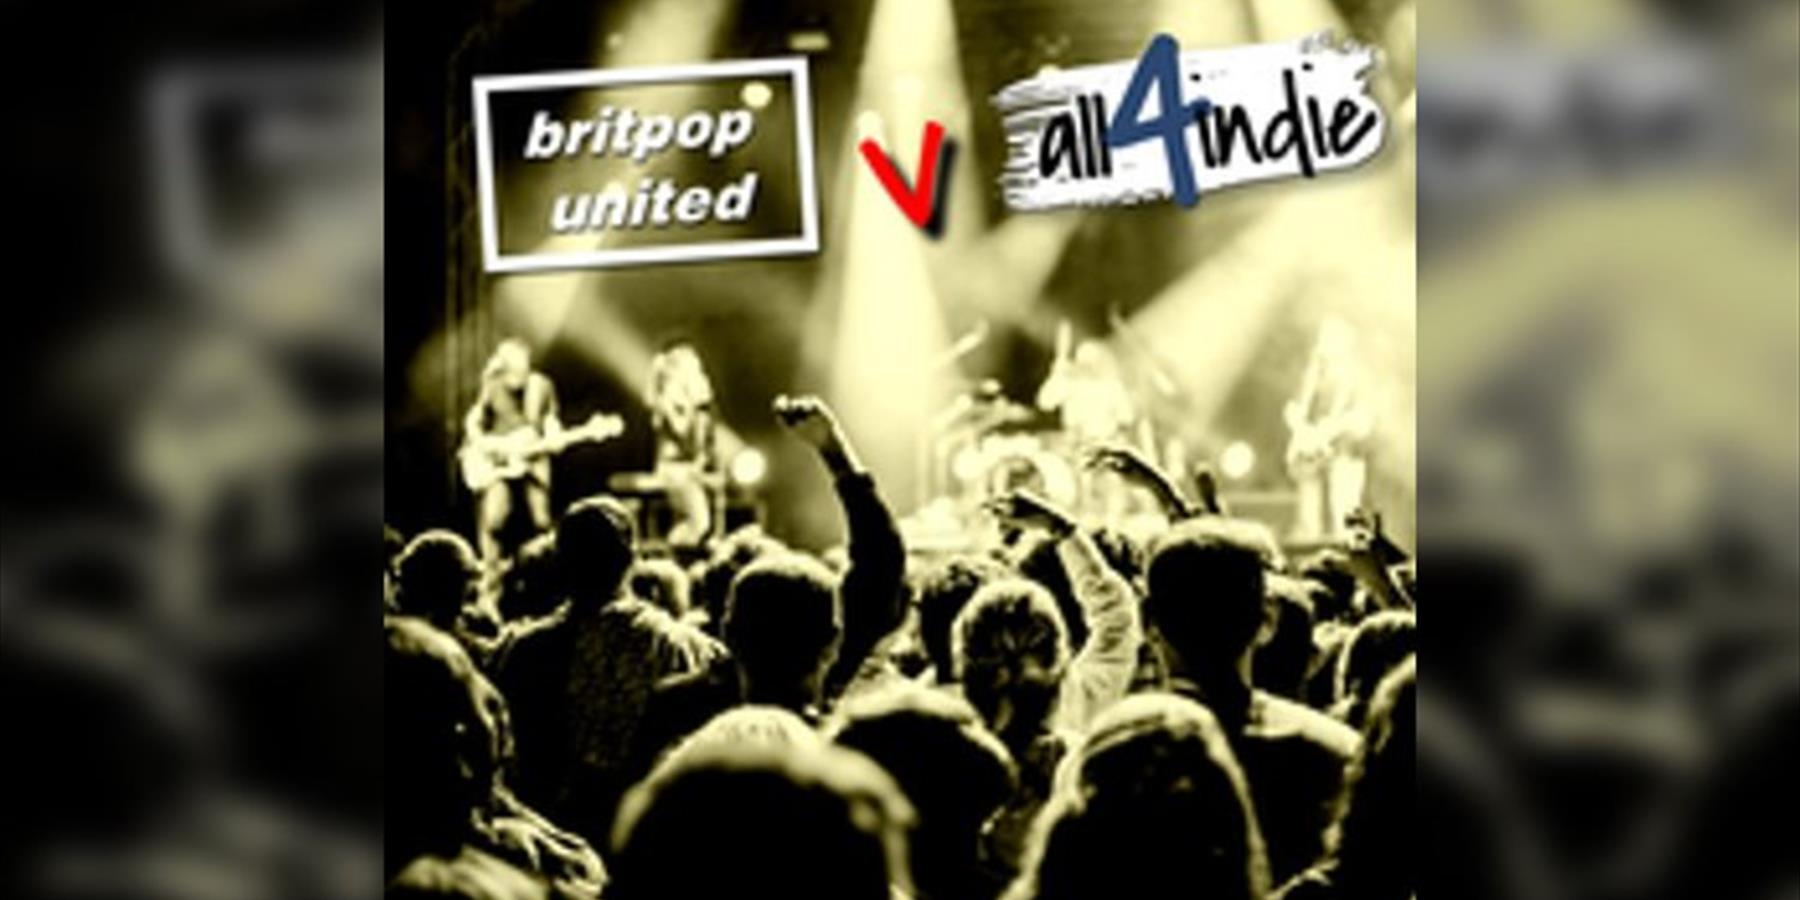 Indie v Britpop...All4indie & Britpop United @ The Soundhouse